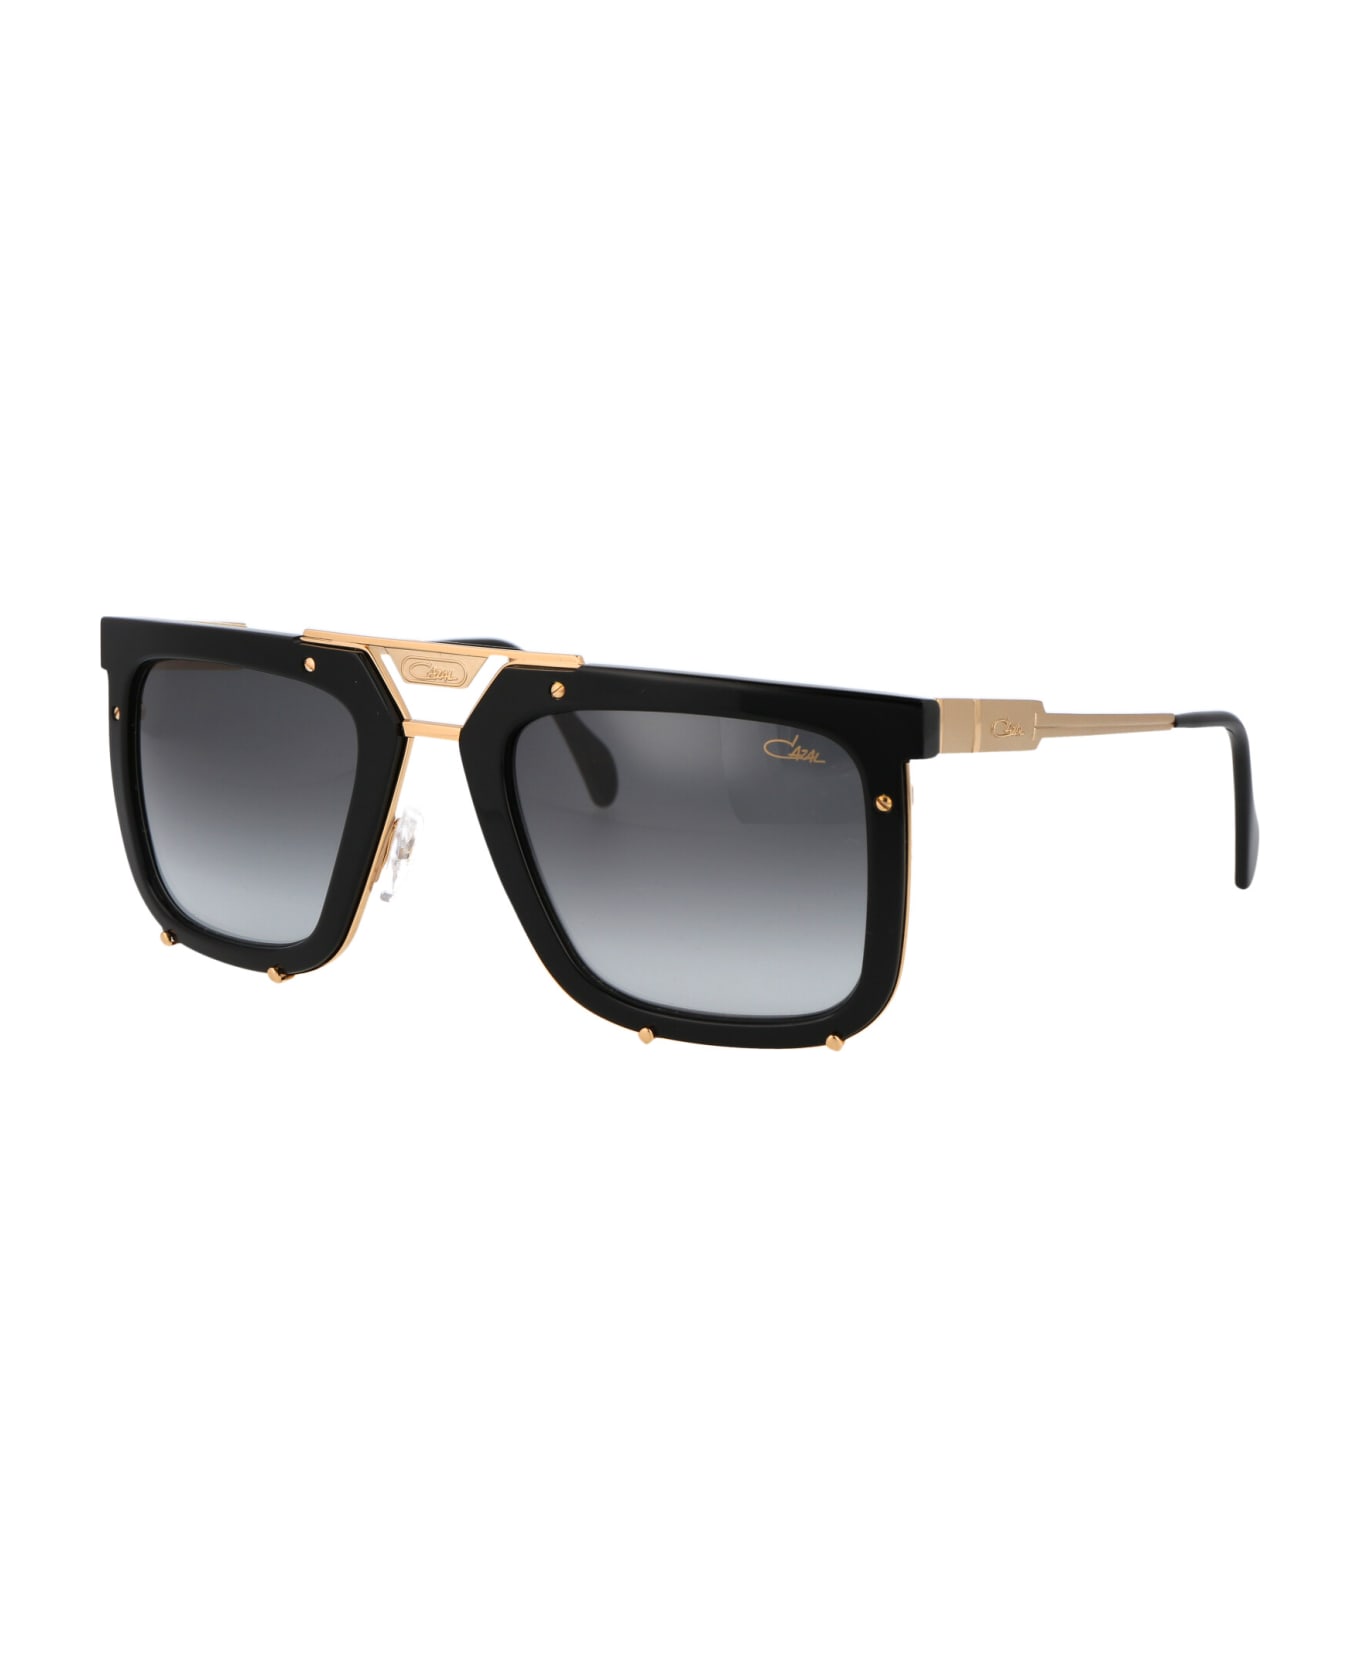 Cazal Mod. 648 Sunglasses - 001 GOLD BLACK サングラス